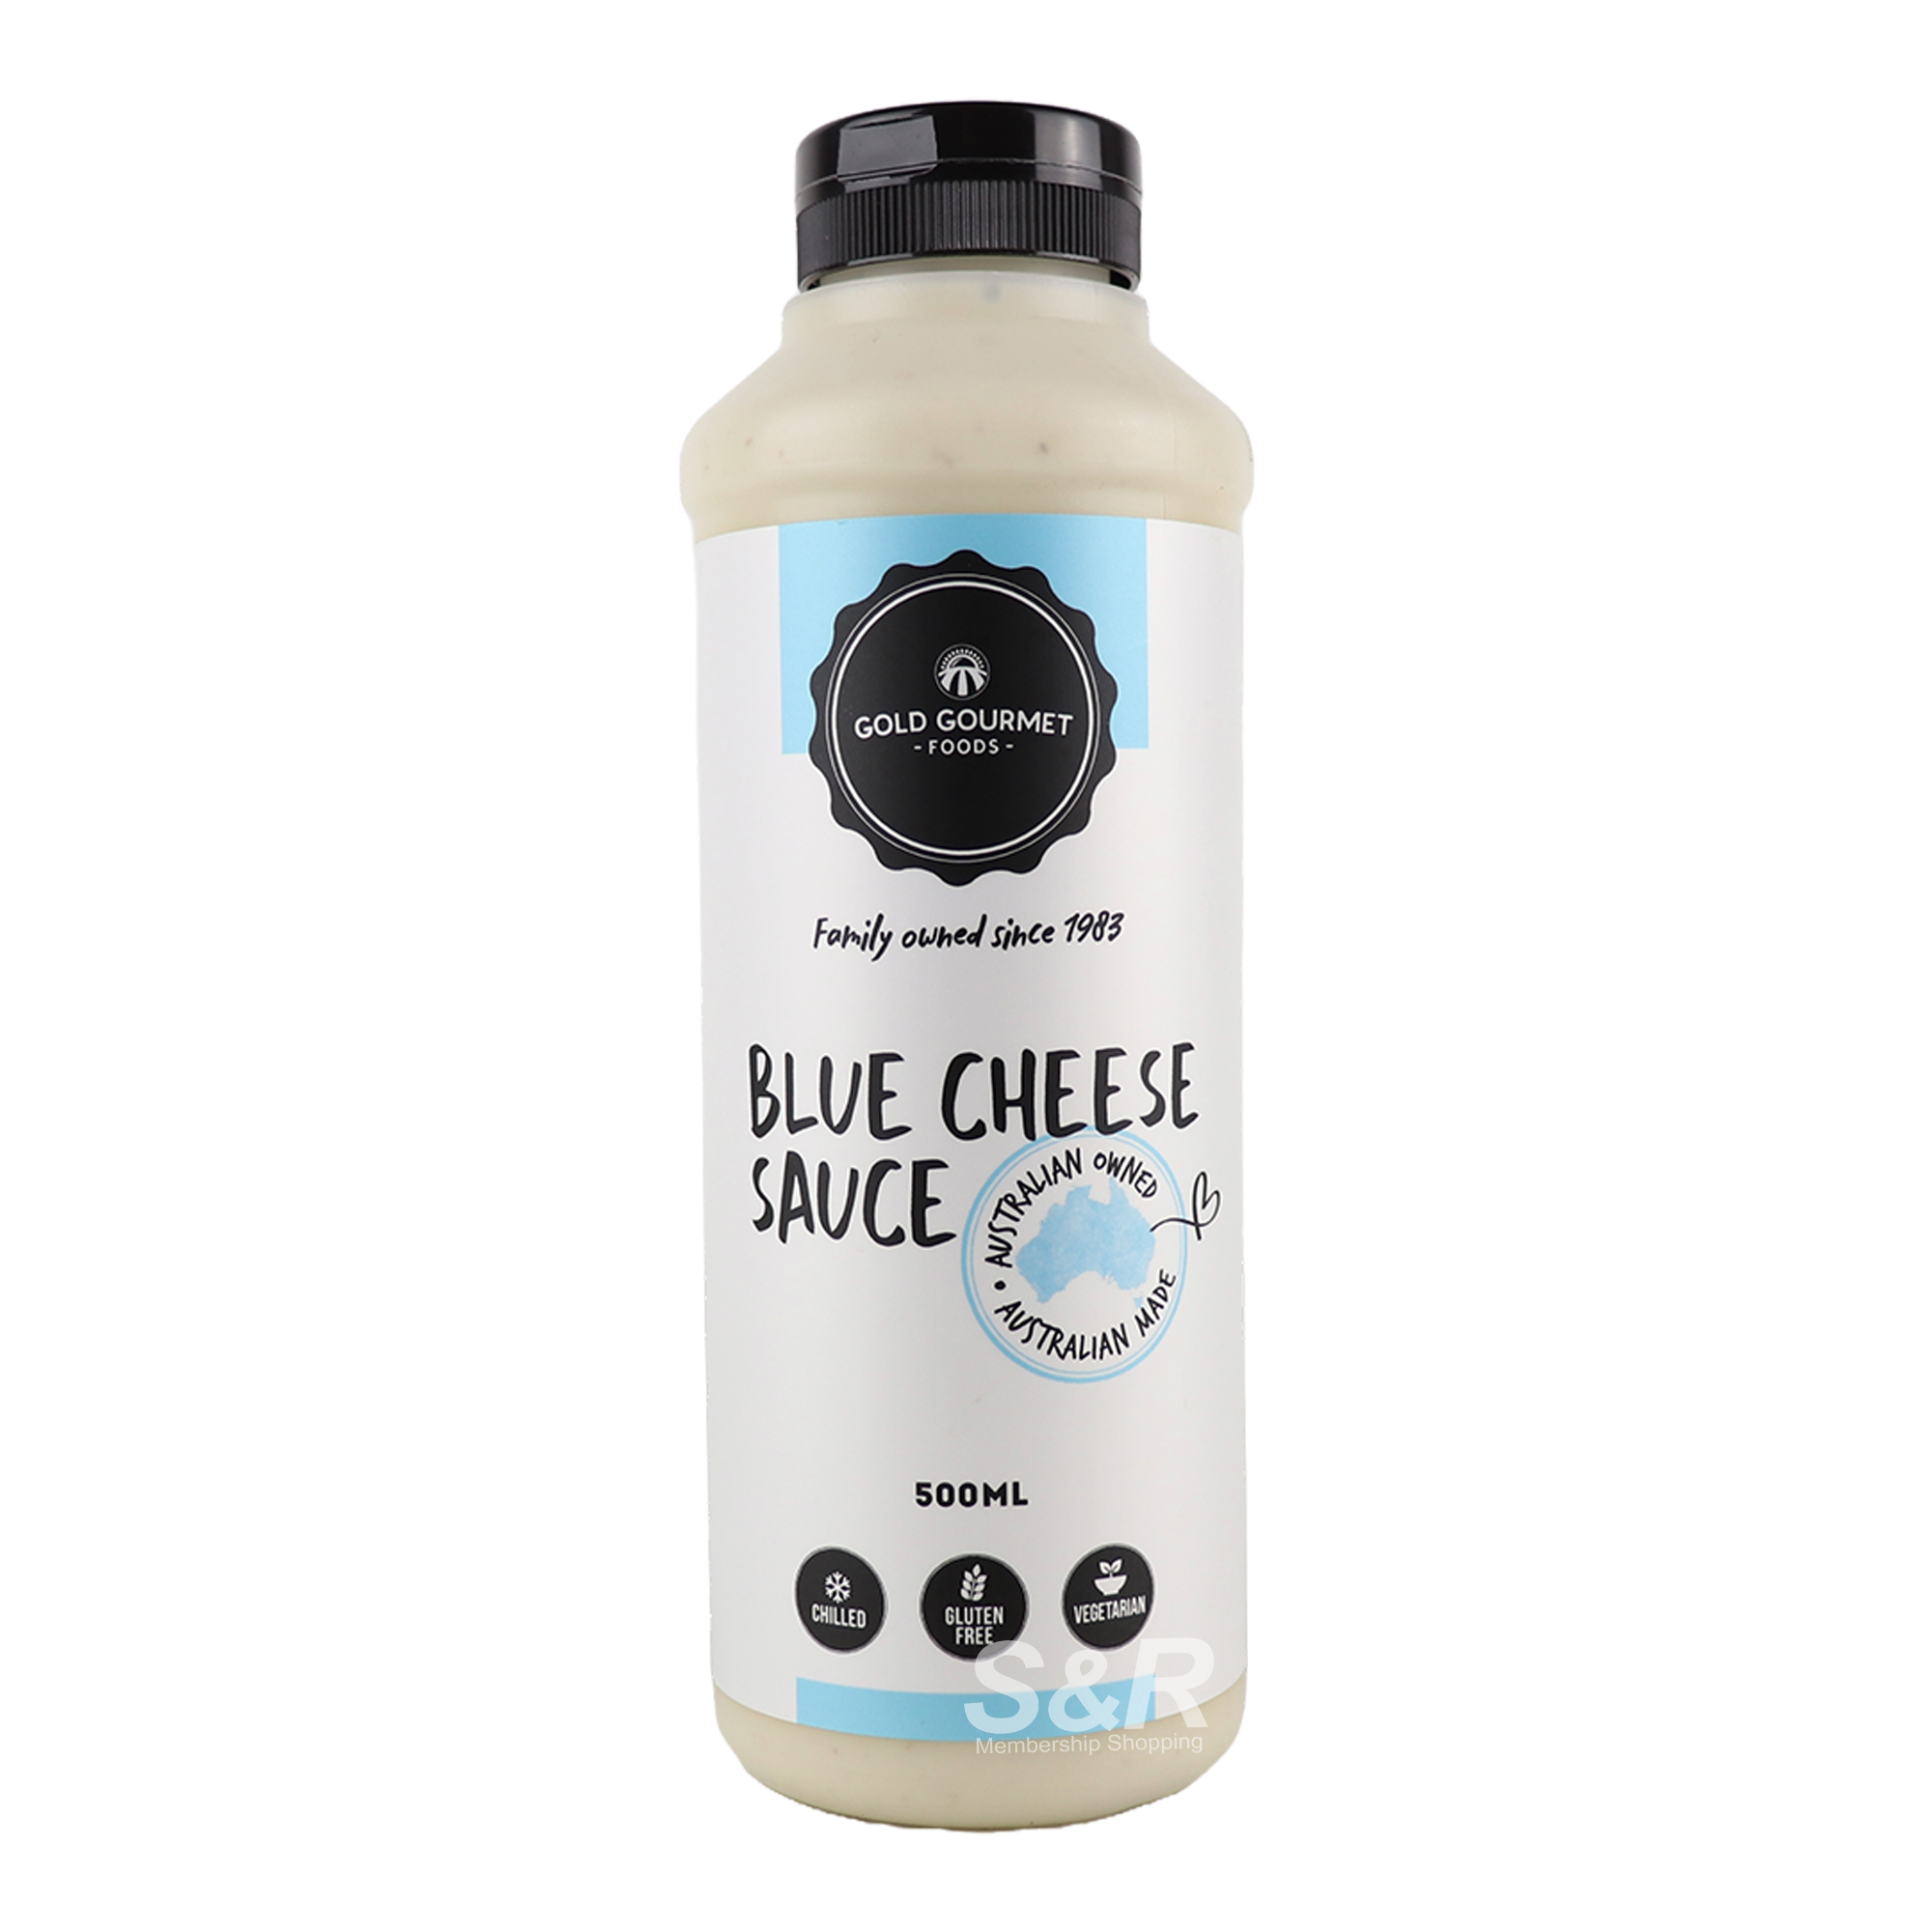 Gold Gourmet Foods Blue Cheese Sauce 500mL